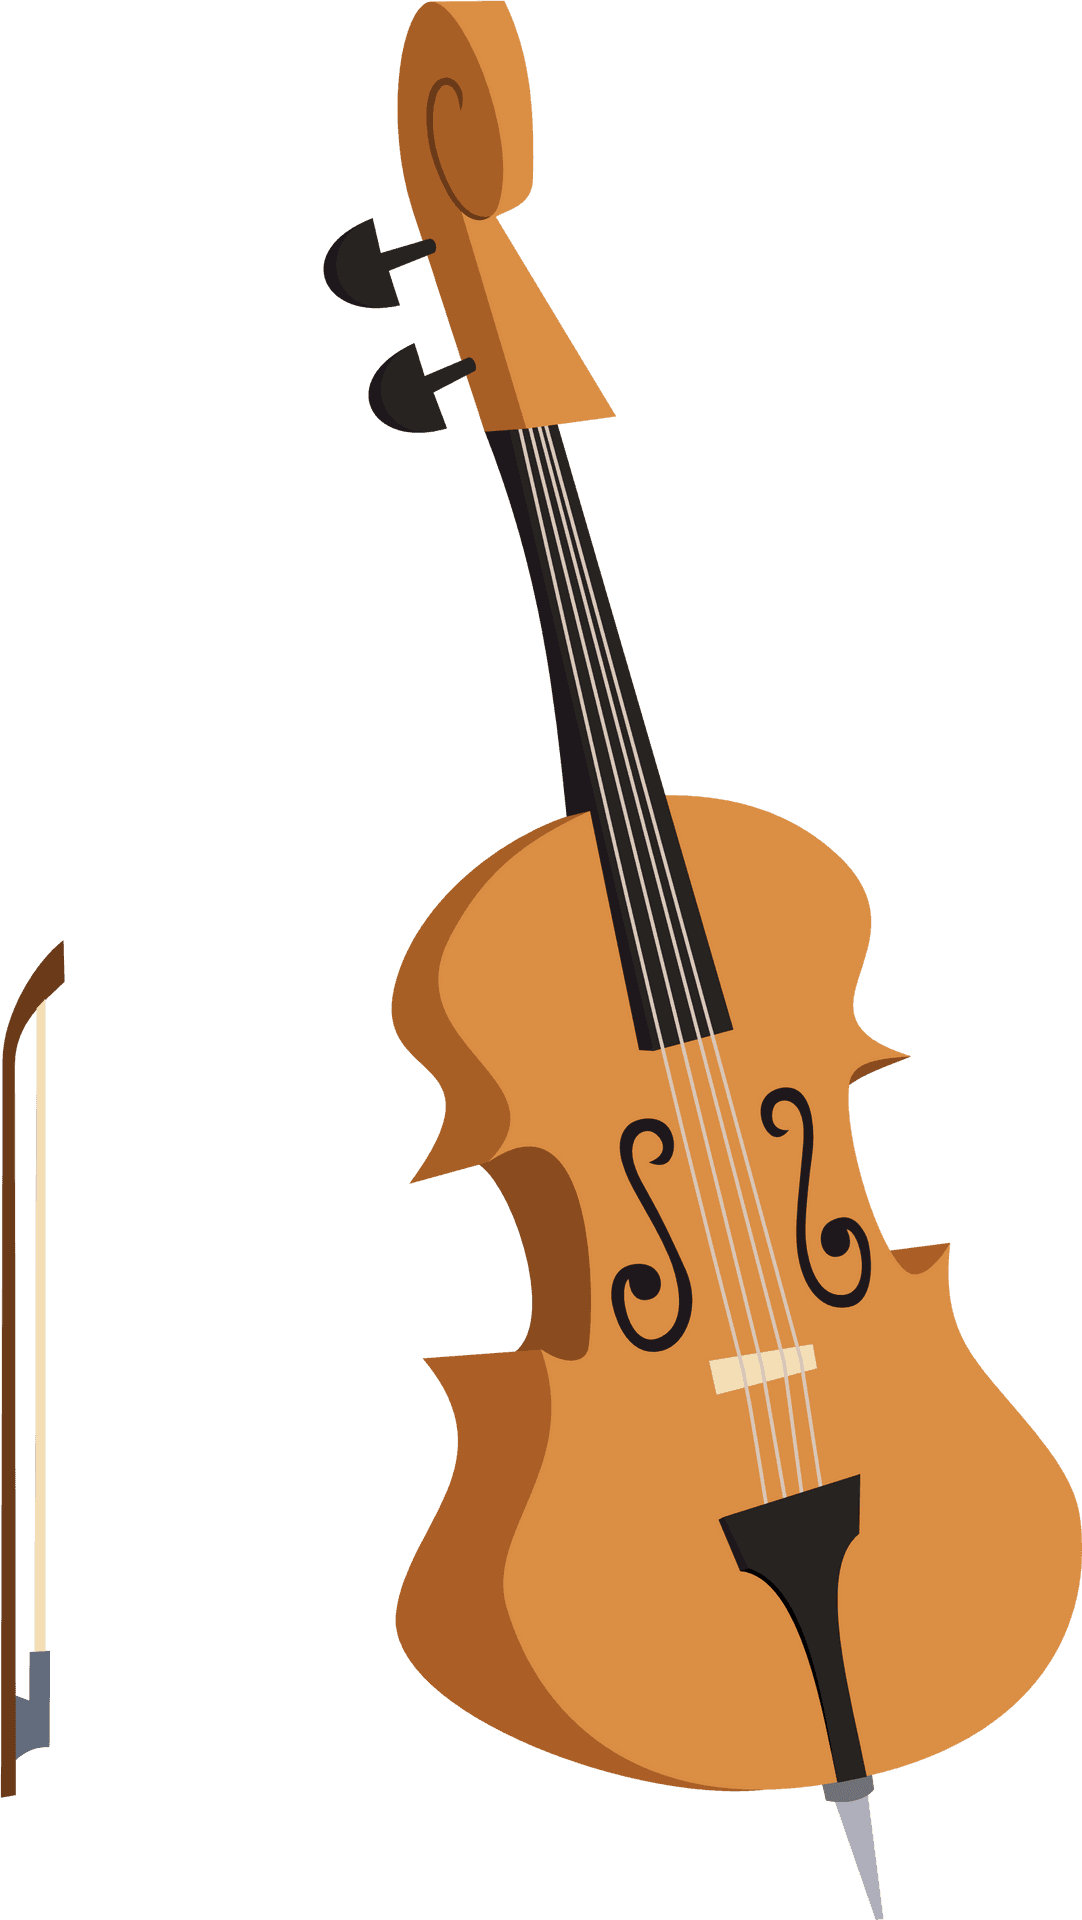 Stylized Cello Illustration PNG image